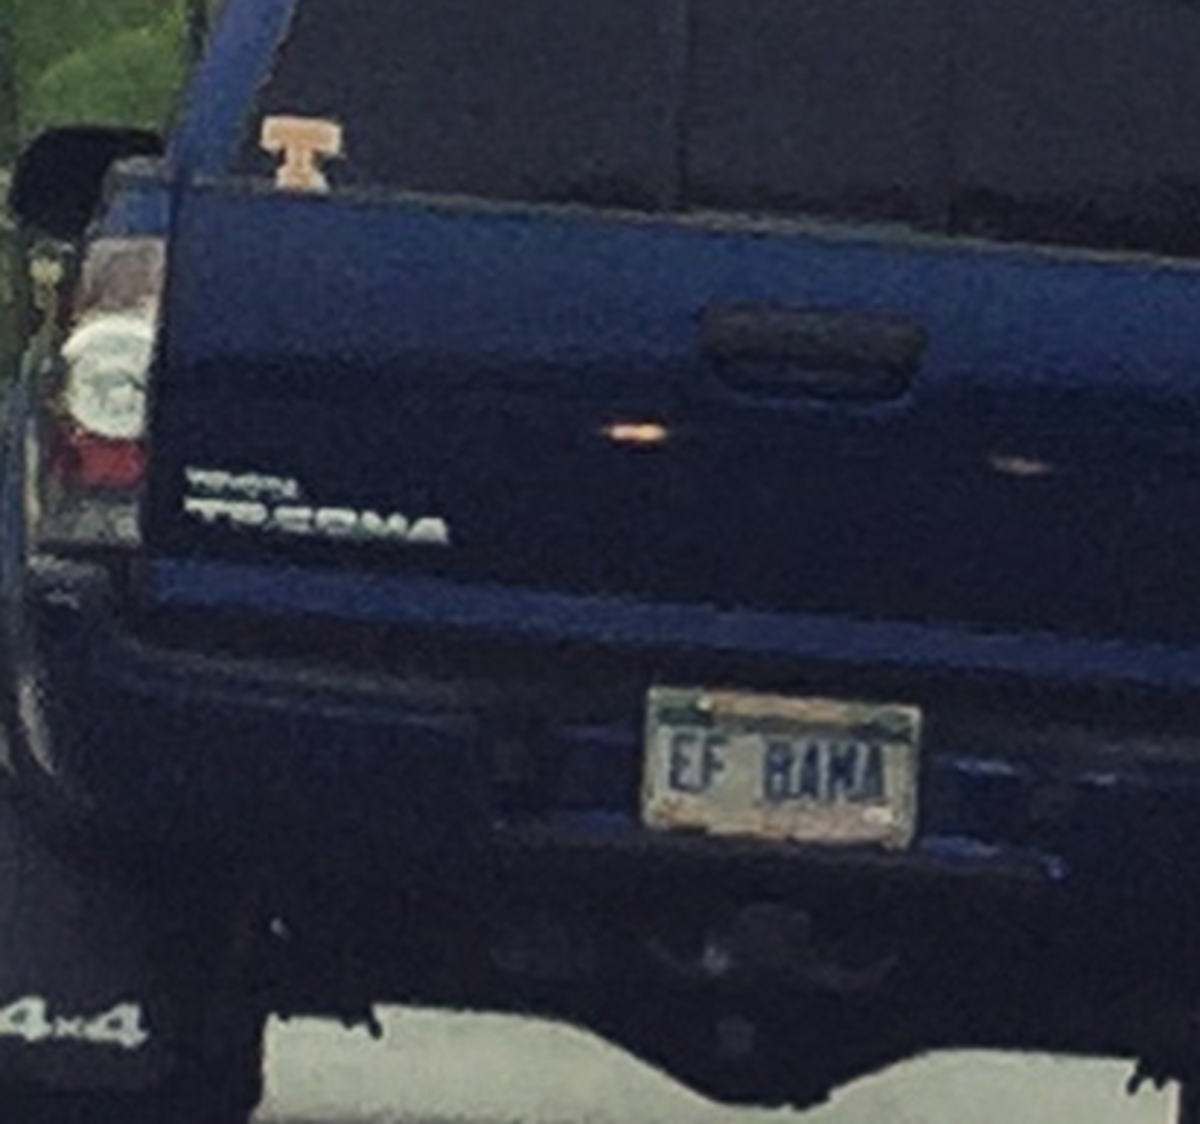 EF Bama License Plate